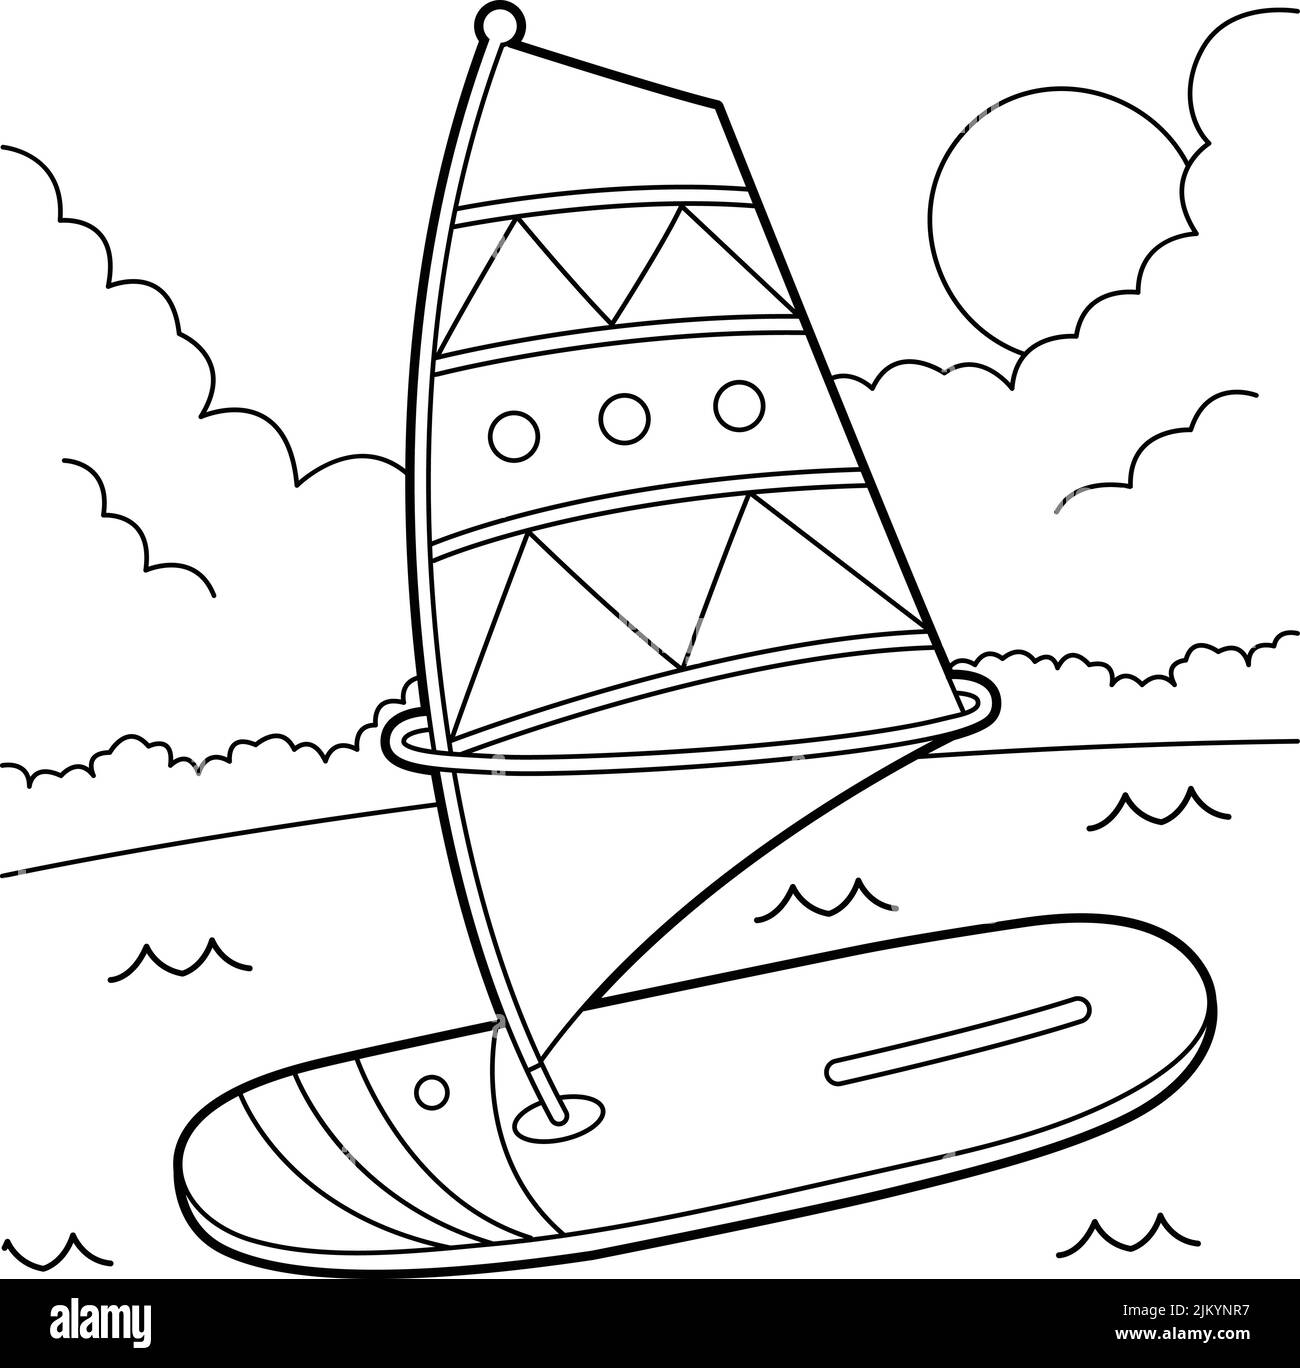 Windsurfer Vehicle Coloring Page for Kids Illustrazione Vettoriale